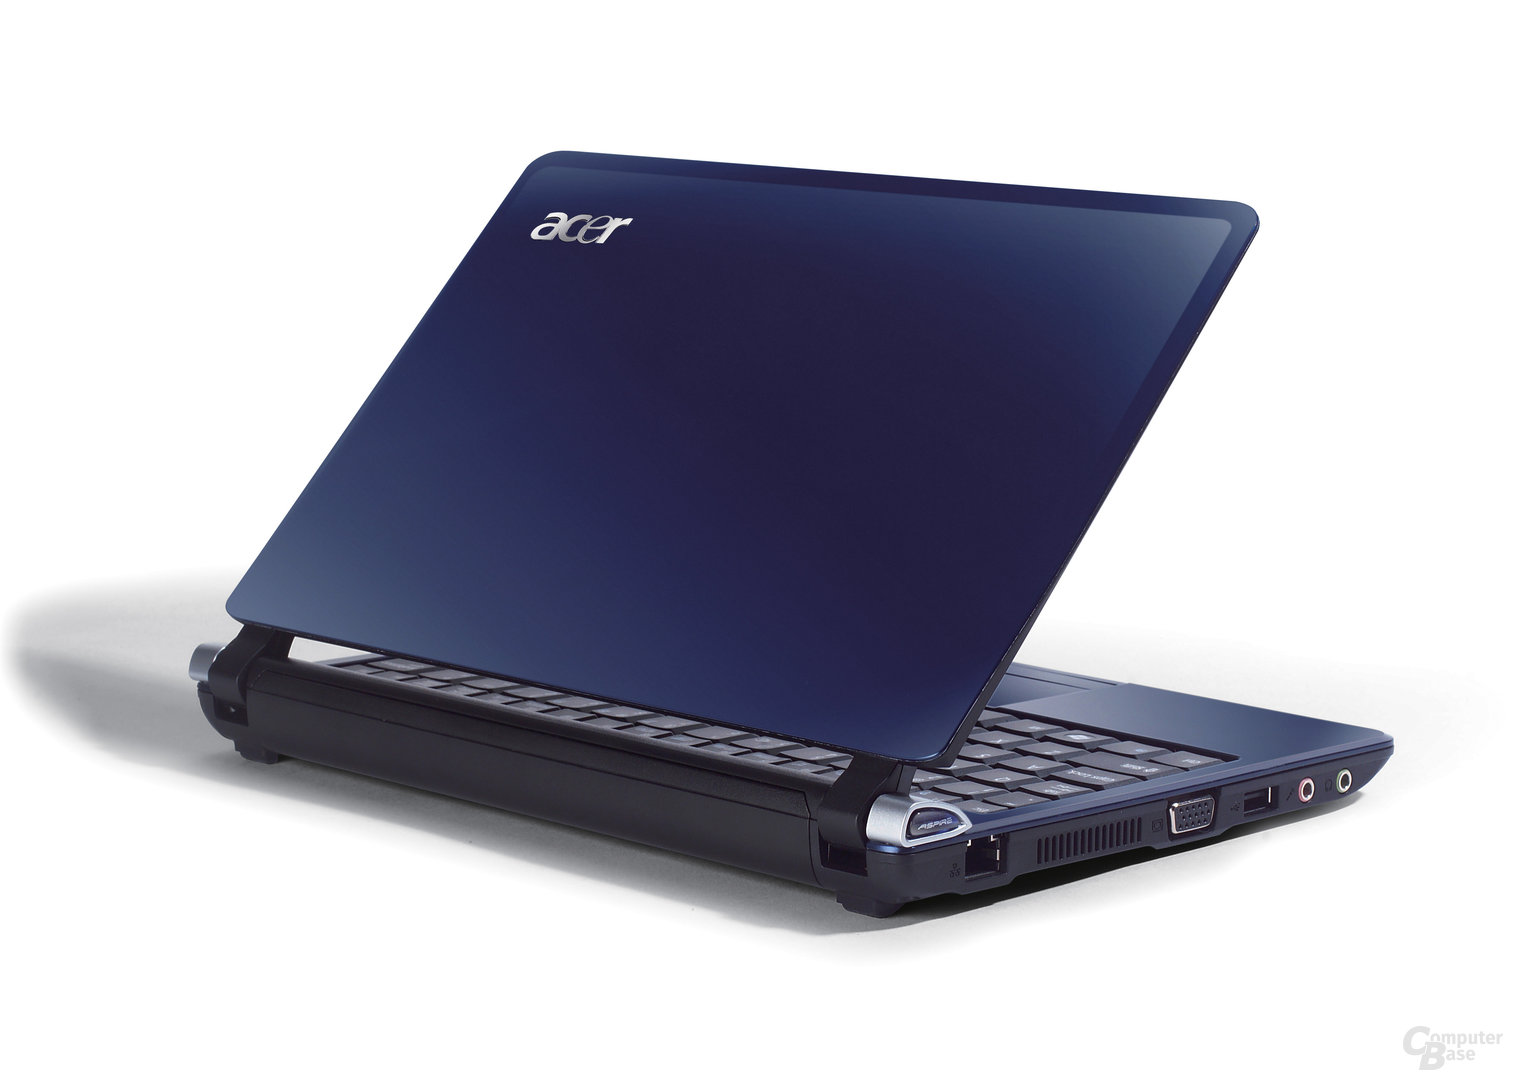 Acer Aspire one D250 in blau